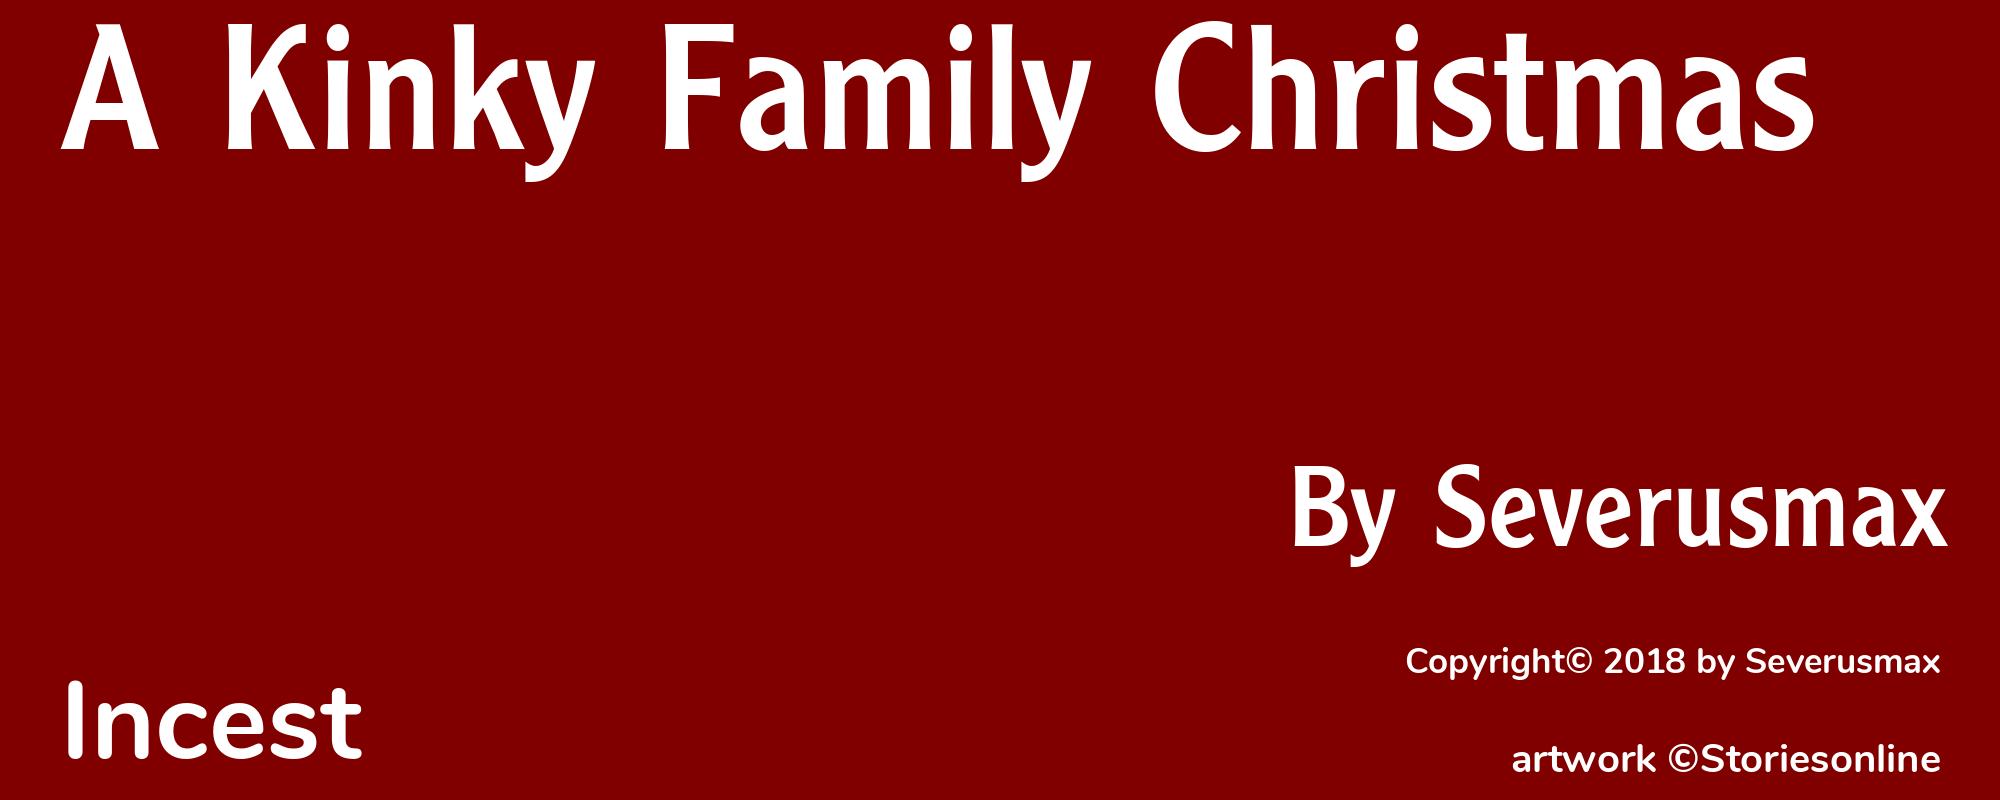 A Kinky Family Christmas - Cover